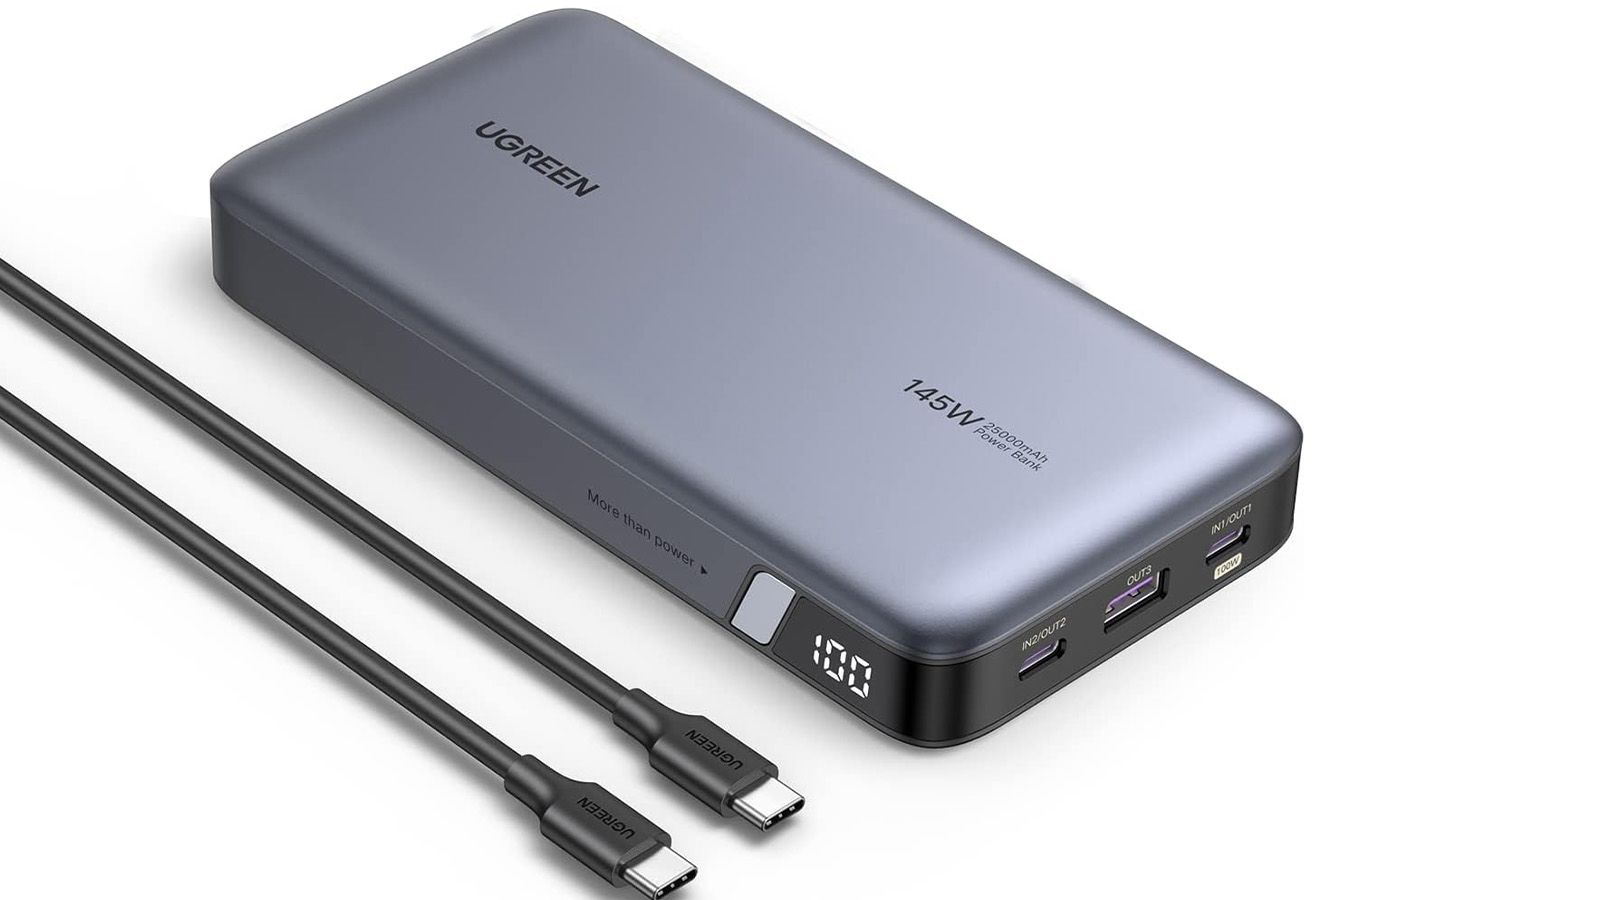 Belkin Portable Power Bank Charger 5K w/USB Port, 5000mAh Capacity